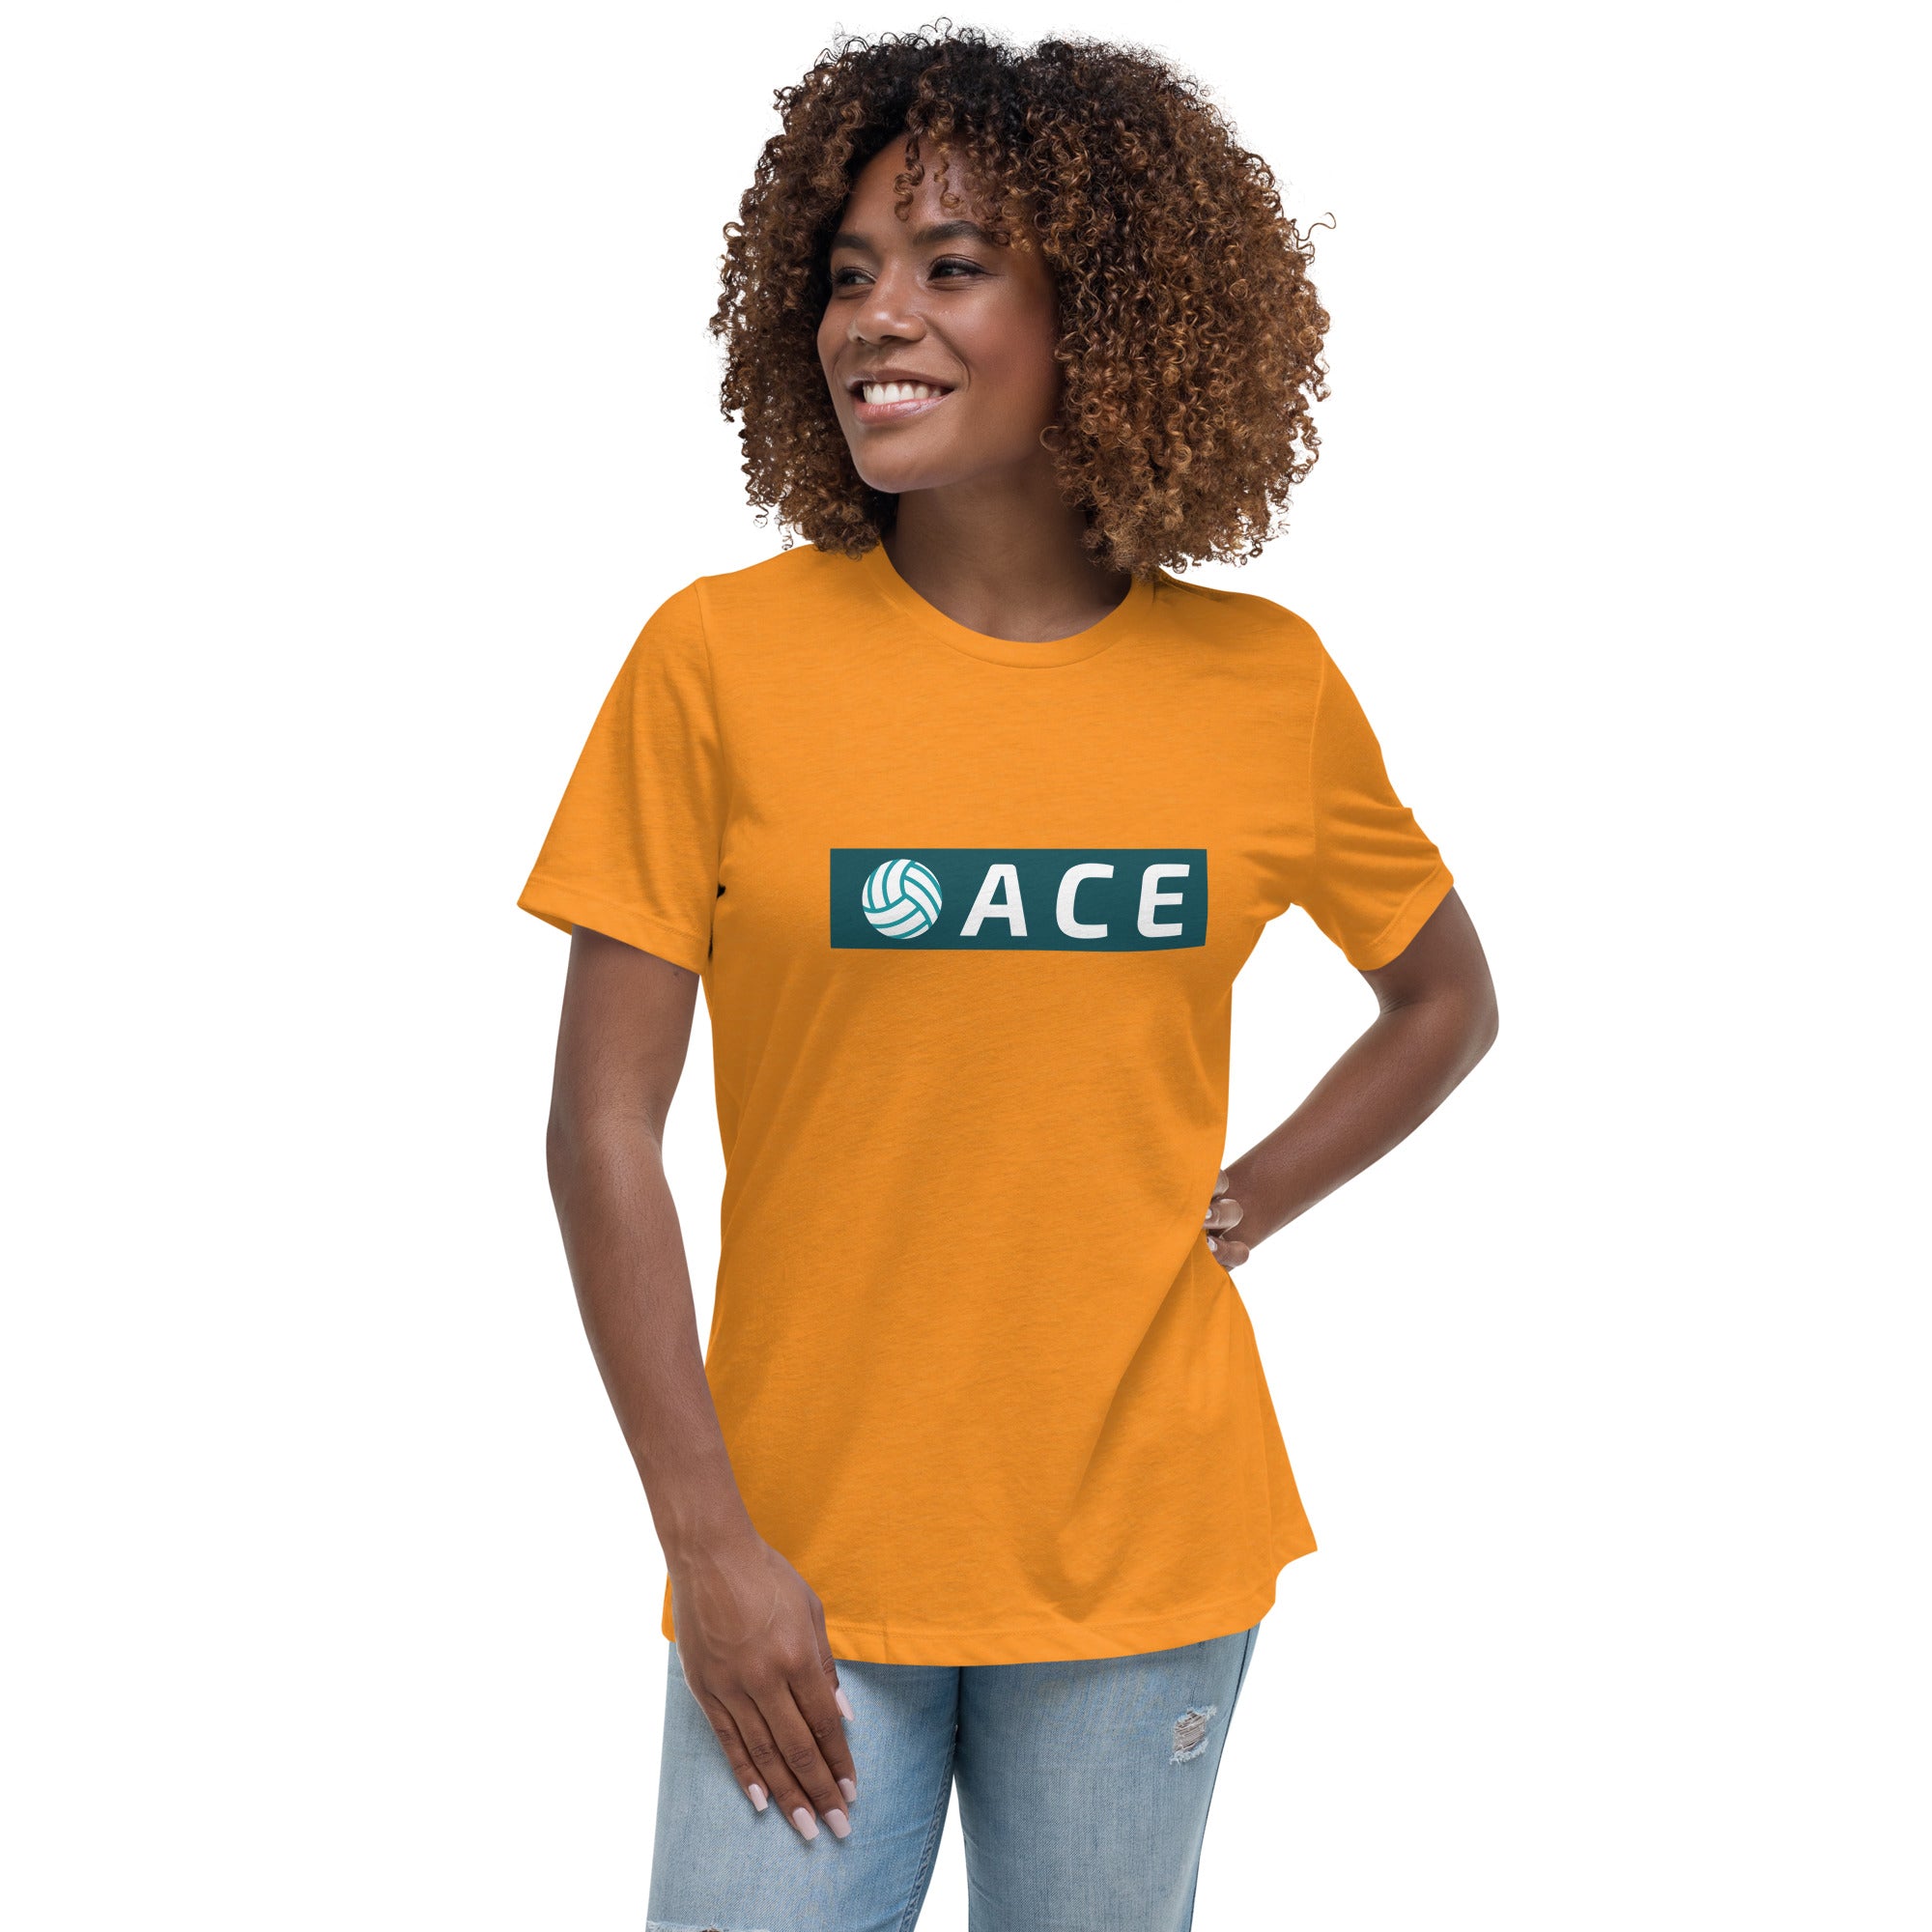 Ace Women's Premium T-Shirt